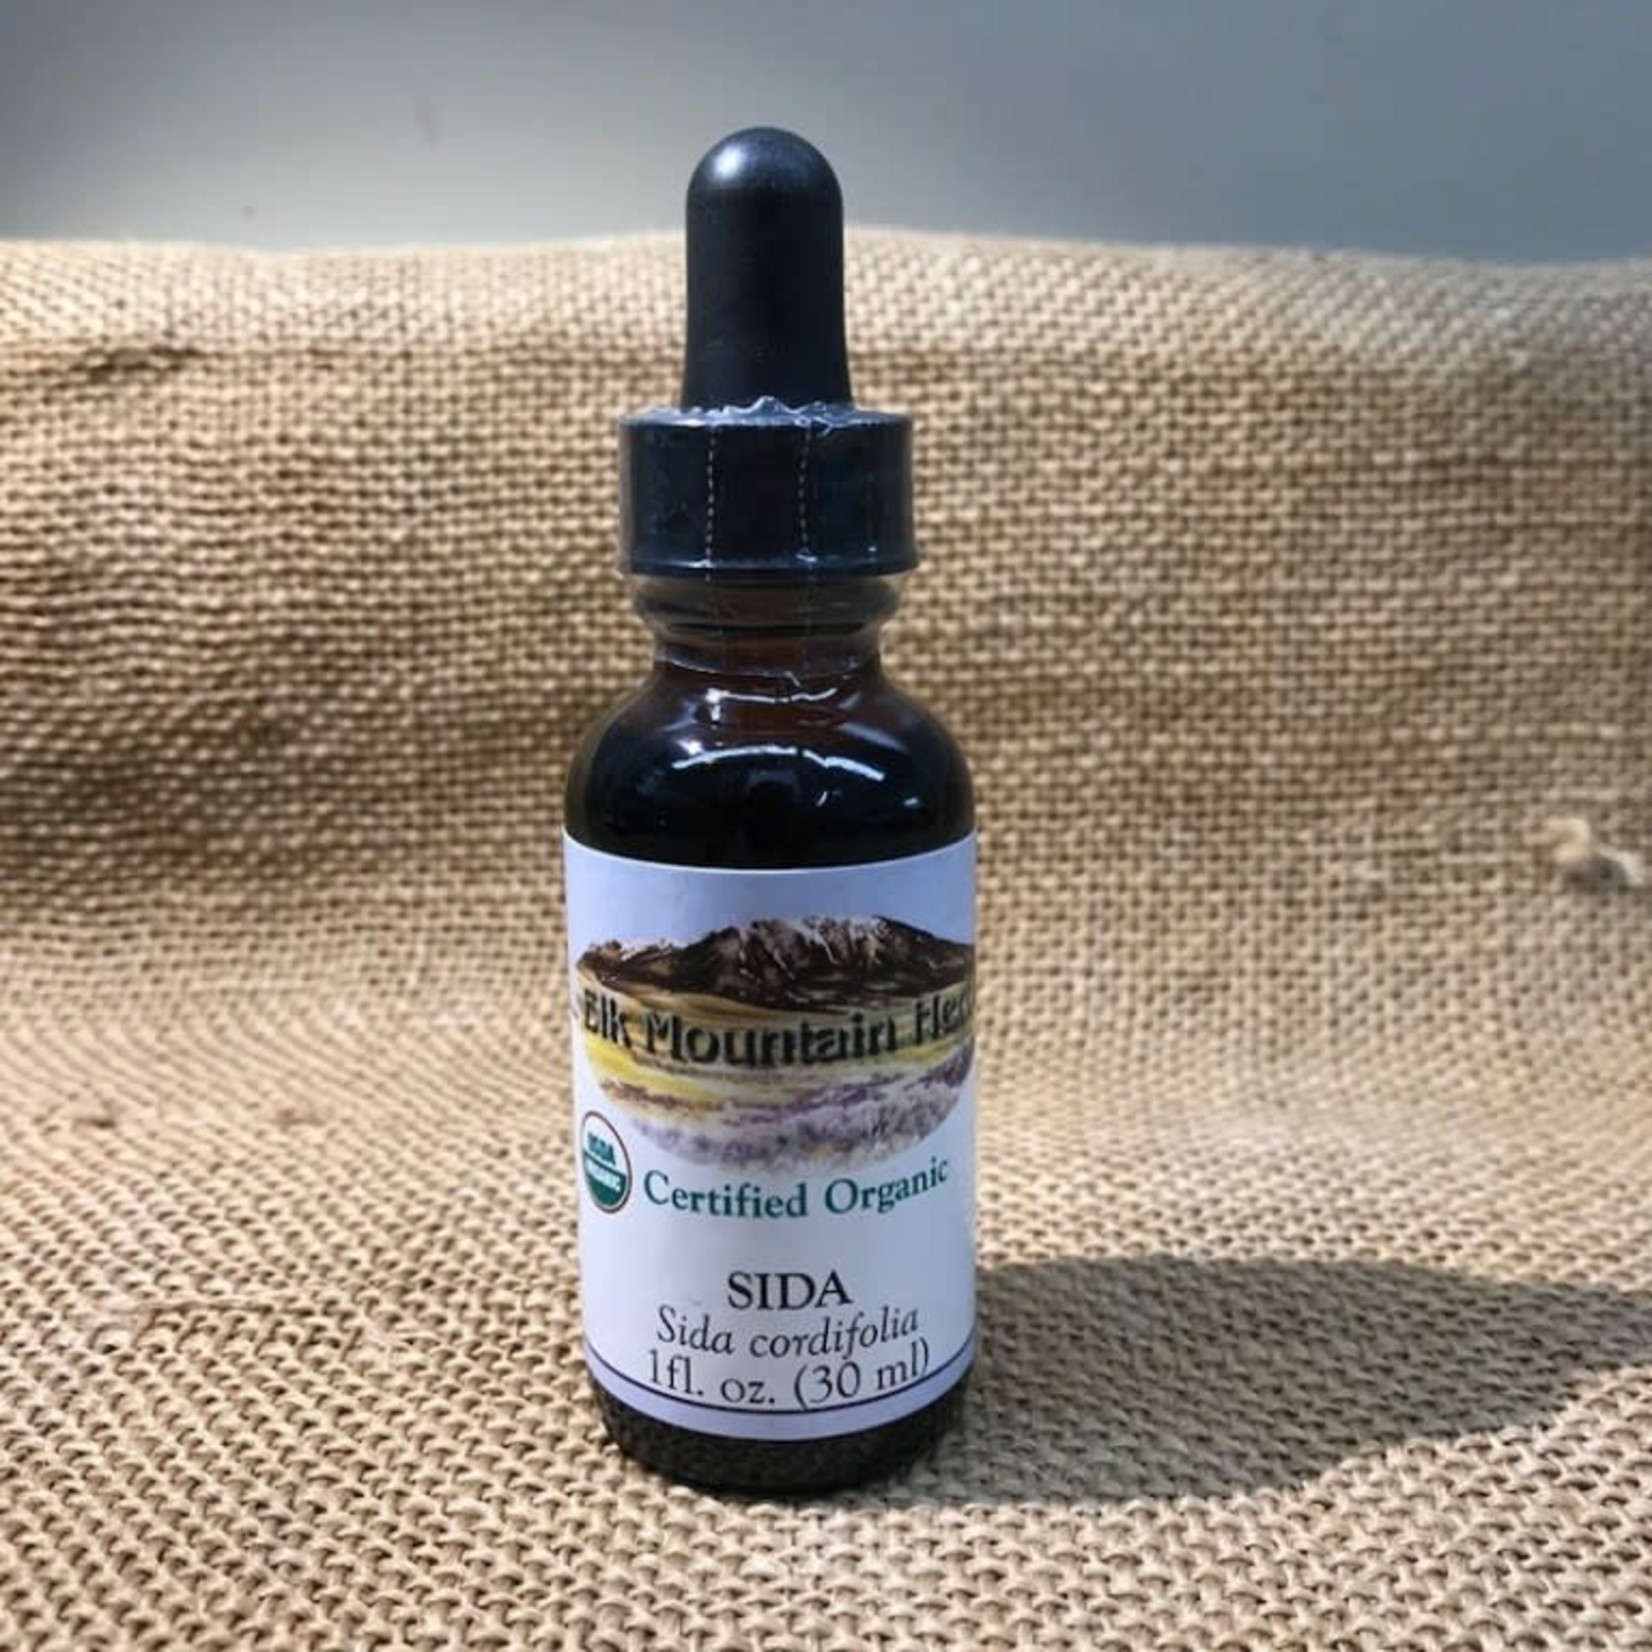 Elk Mountain Herbs Sida (Bala) Tincture, Certified Organic